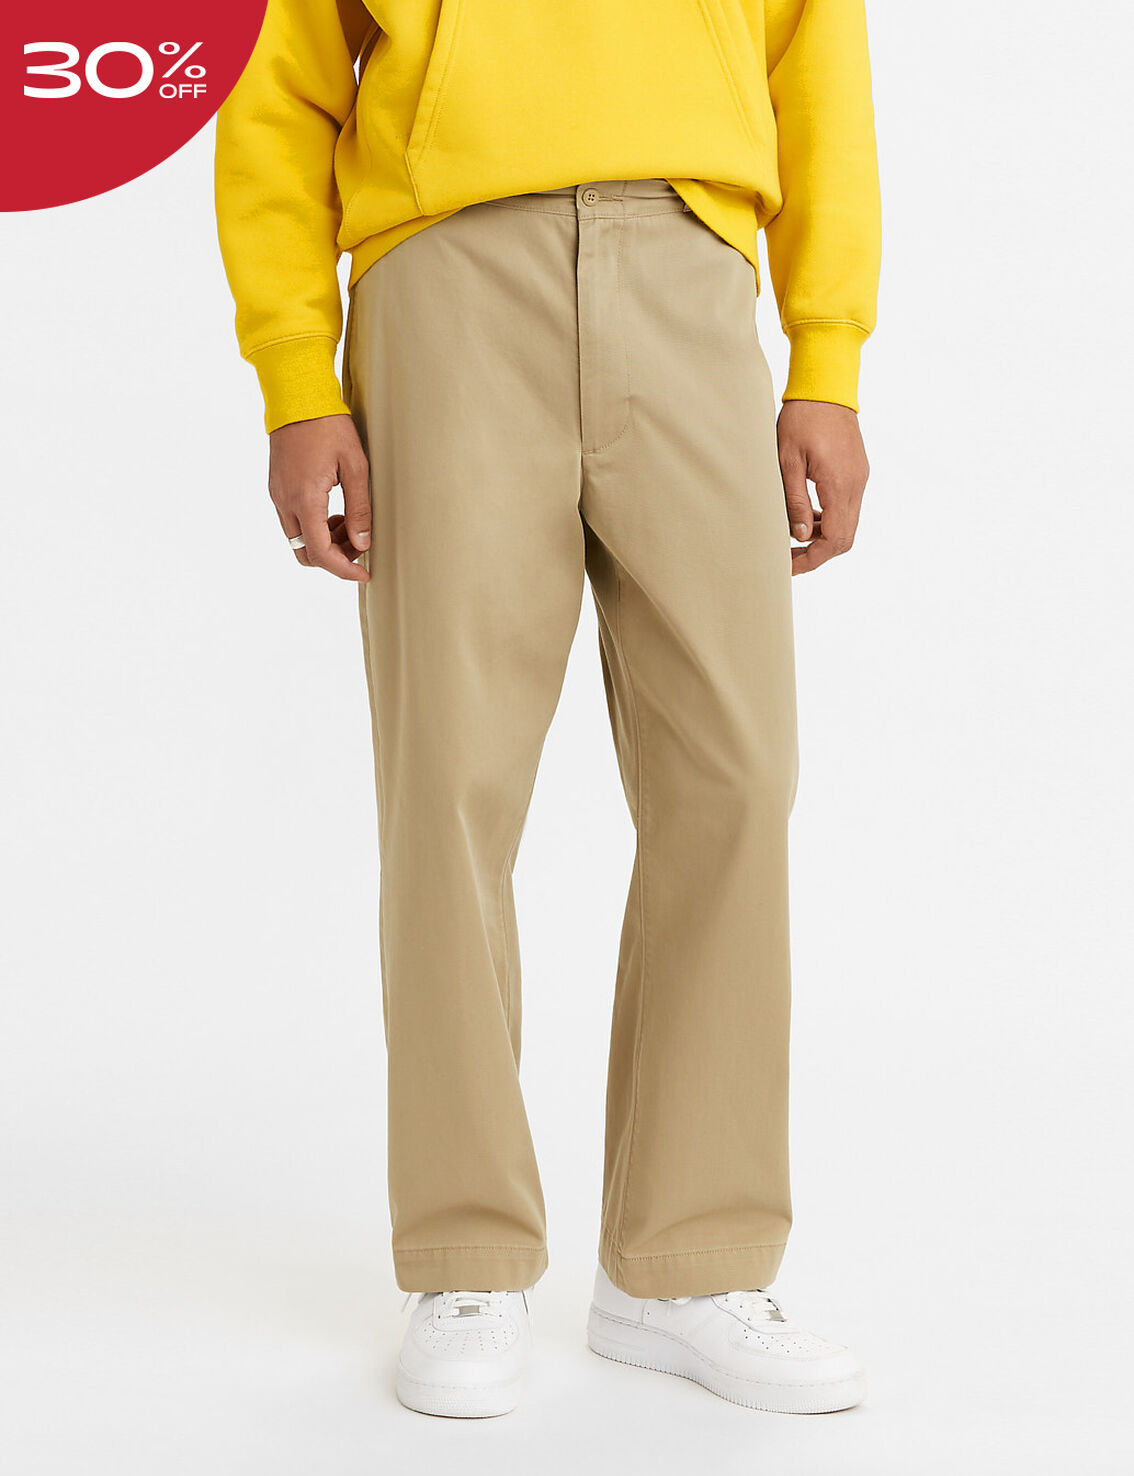 Levi's® Skate Loose Chino Pants For Men - Durable Pants